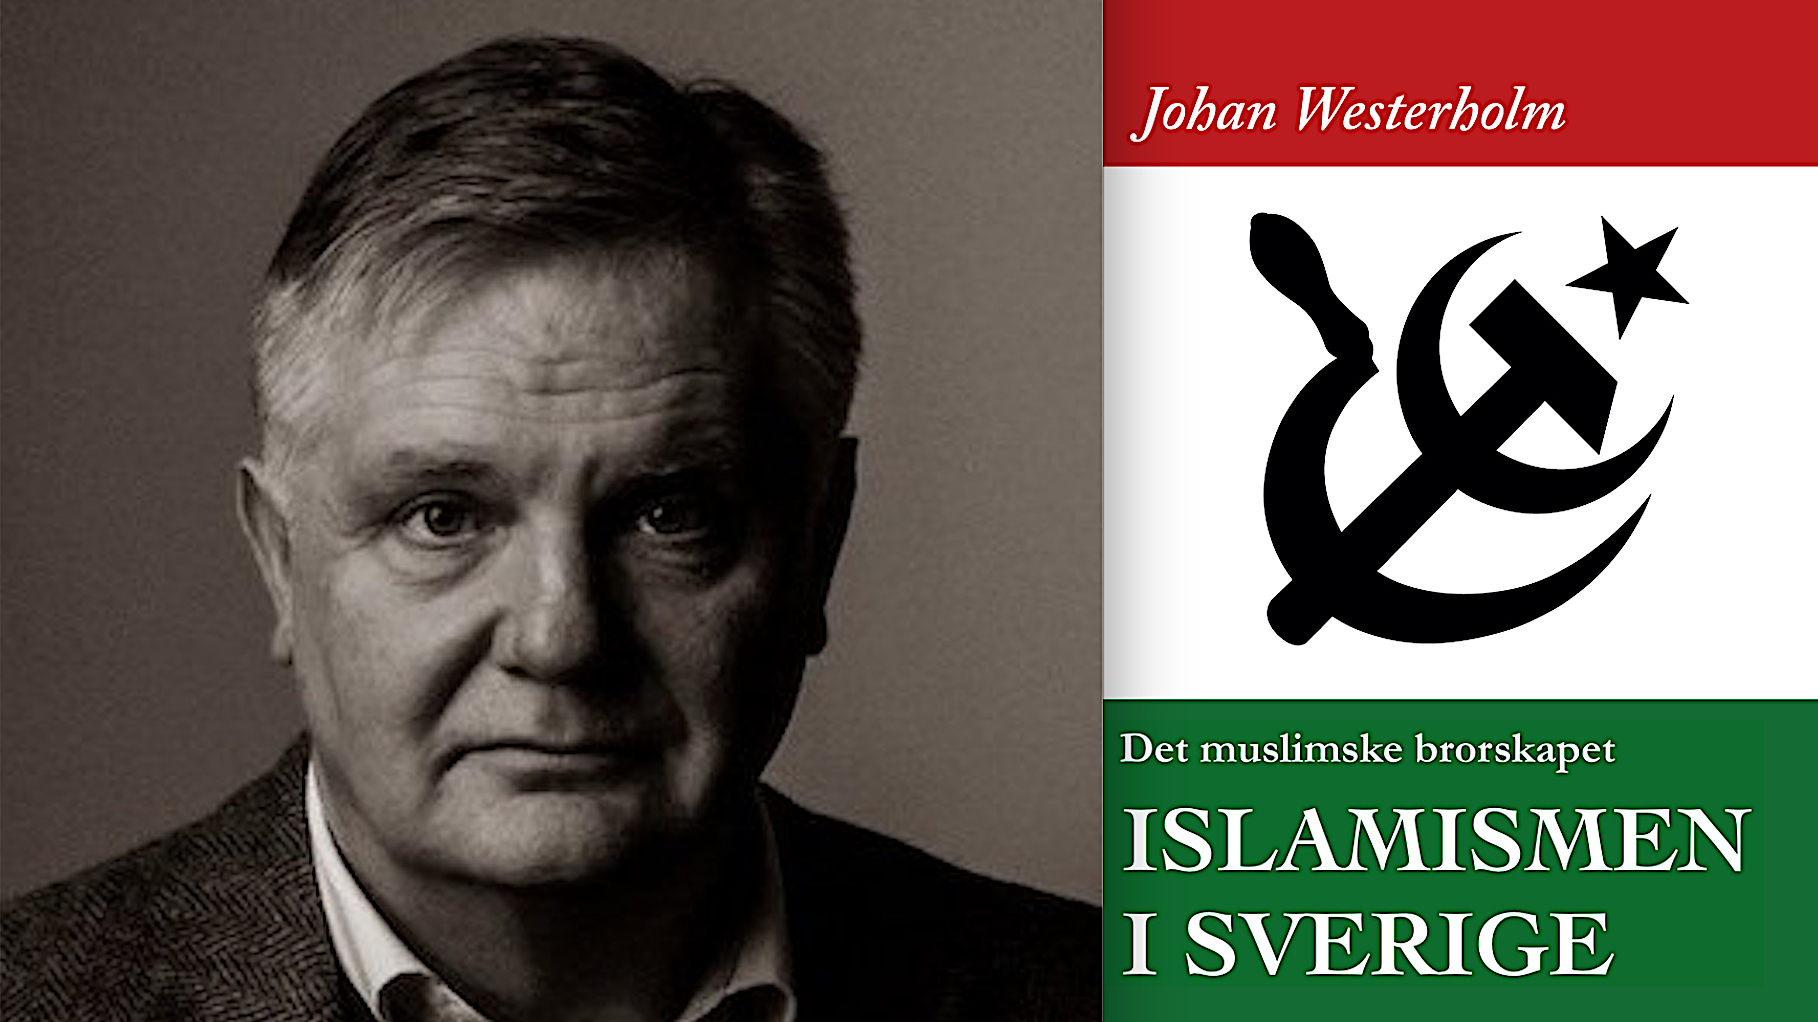 https://www.document.no/wp-content/uploads/2020/05/johan-westerholm-islamismen-i-sverige-cropped.jpg